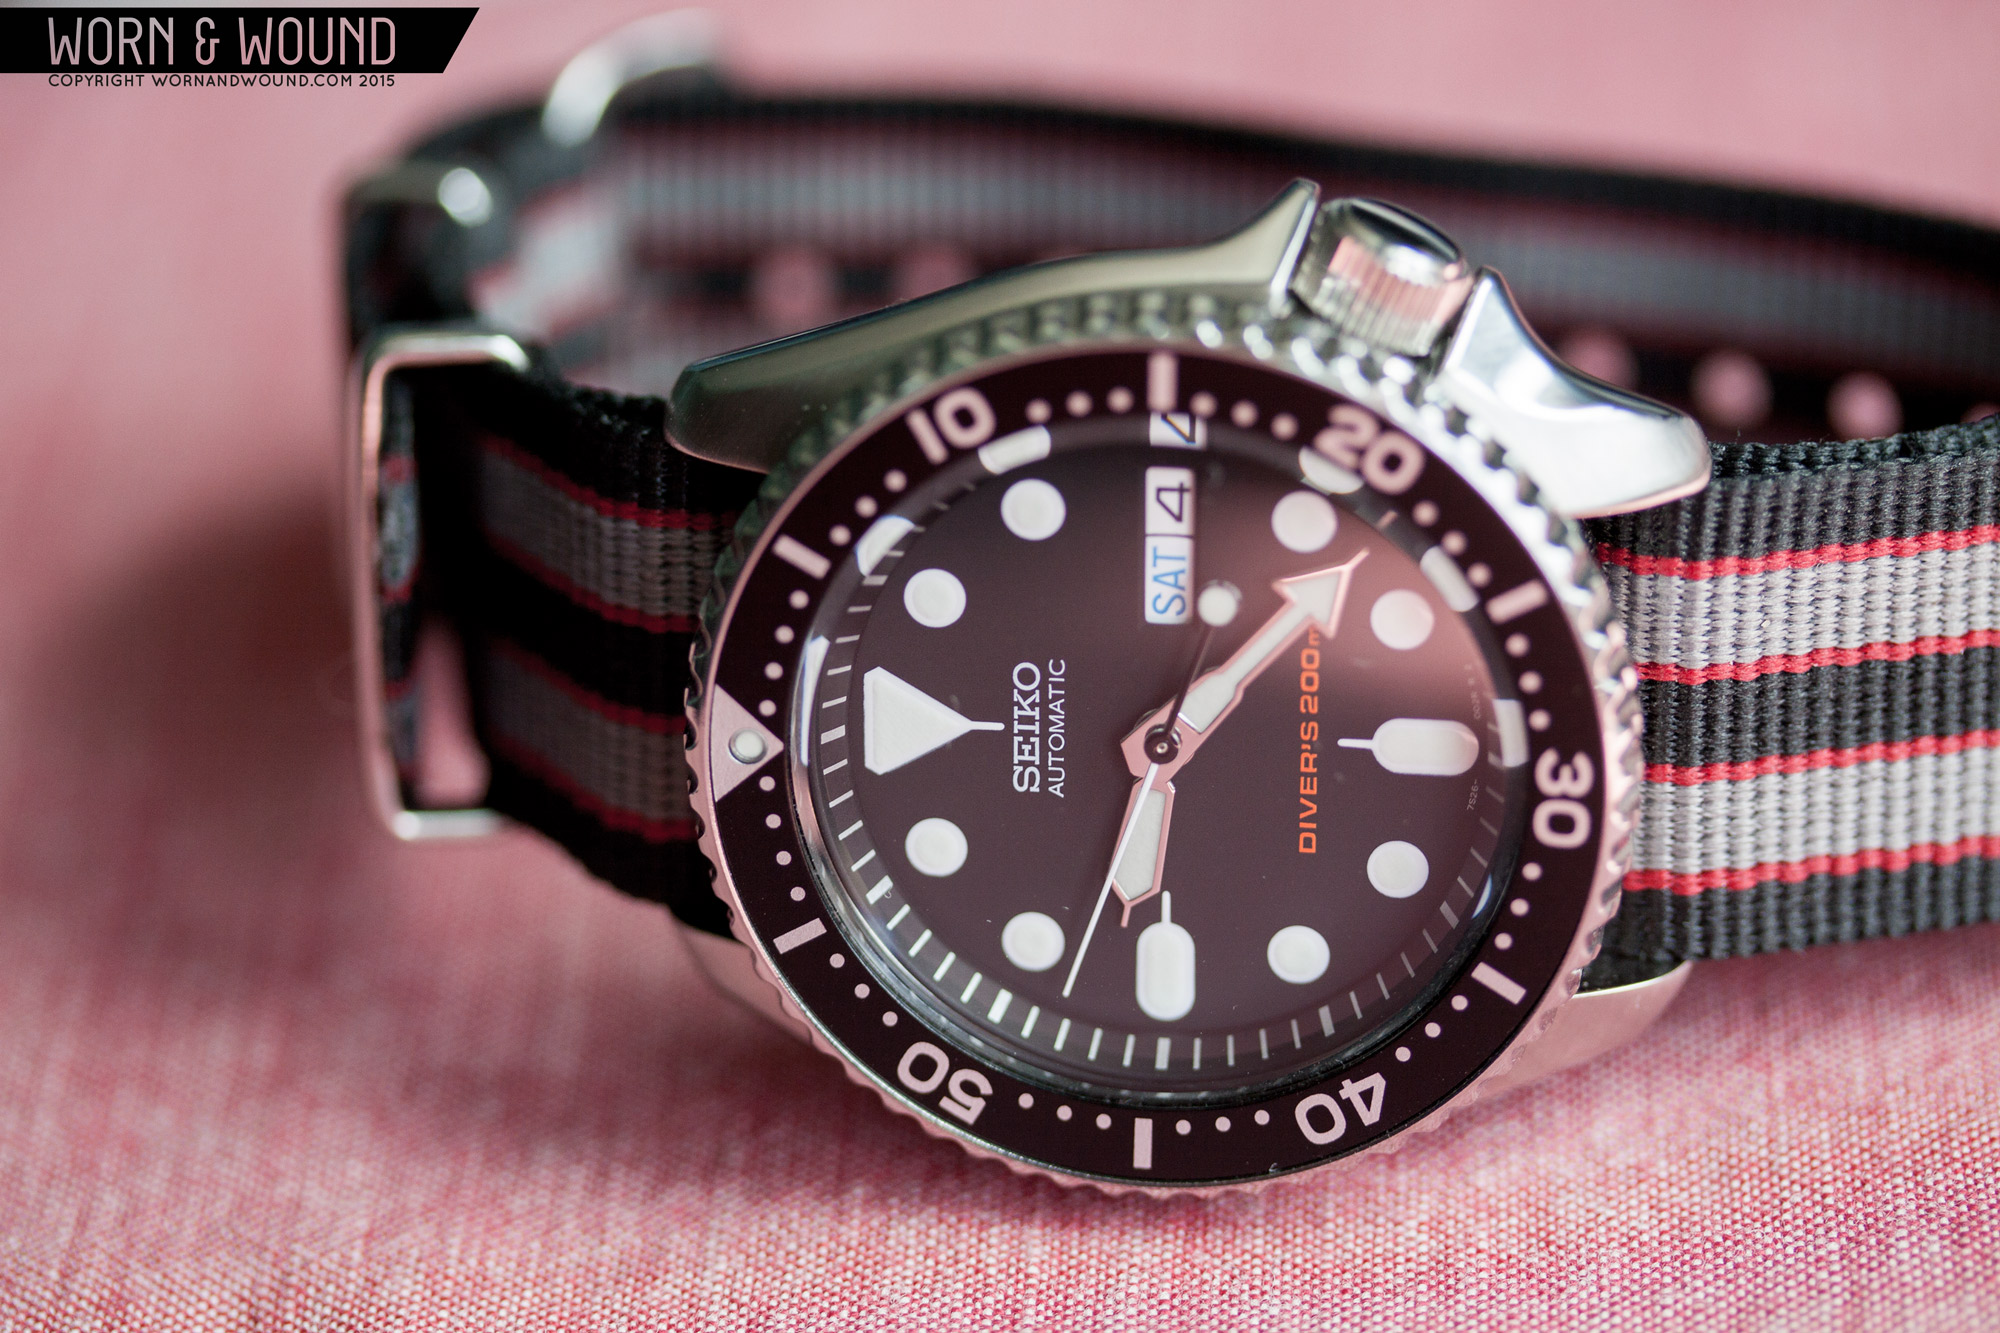 Replica Seiko SKX007 Review - Best Swiss Watch Replica OnlineBest Swiss